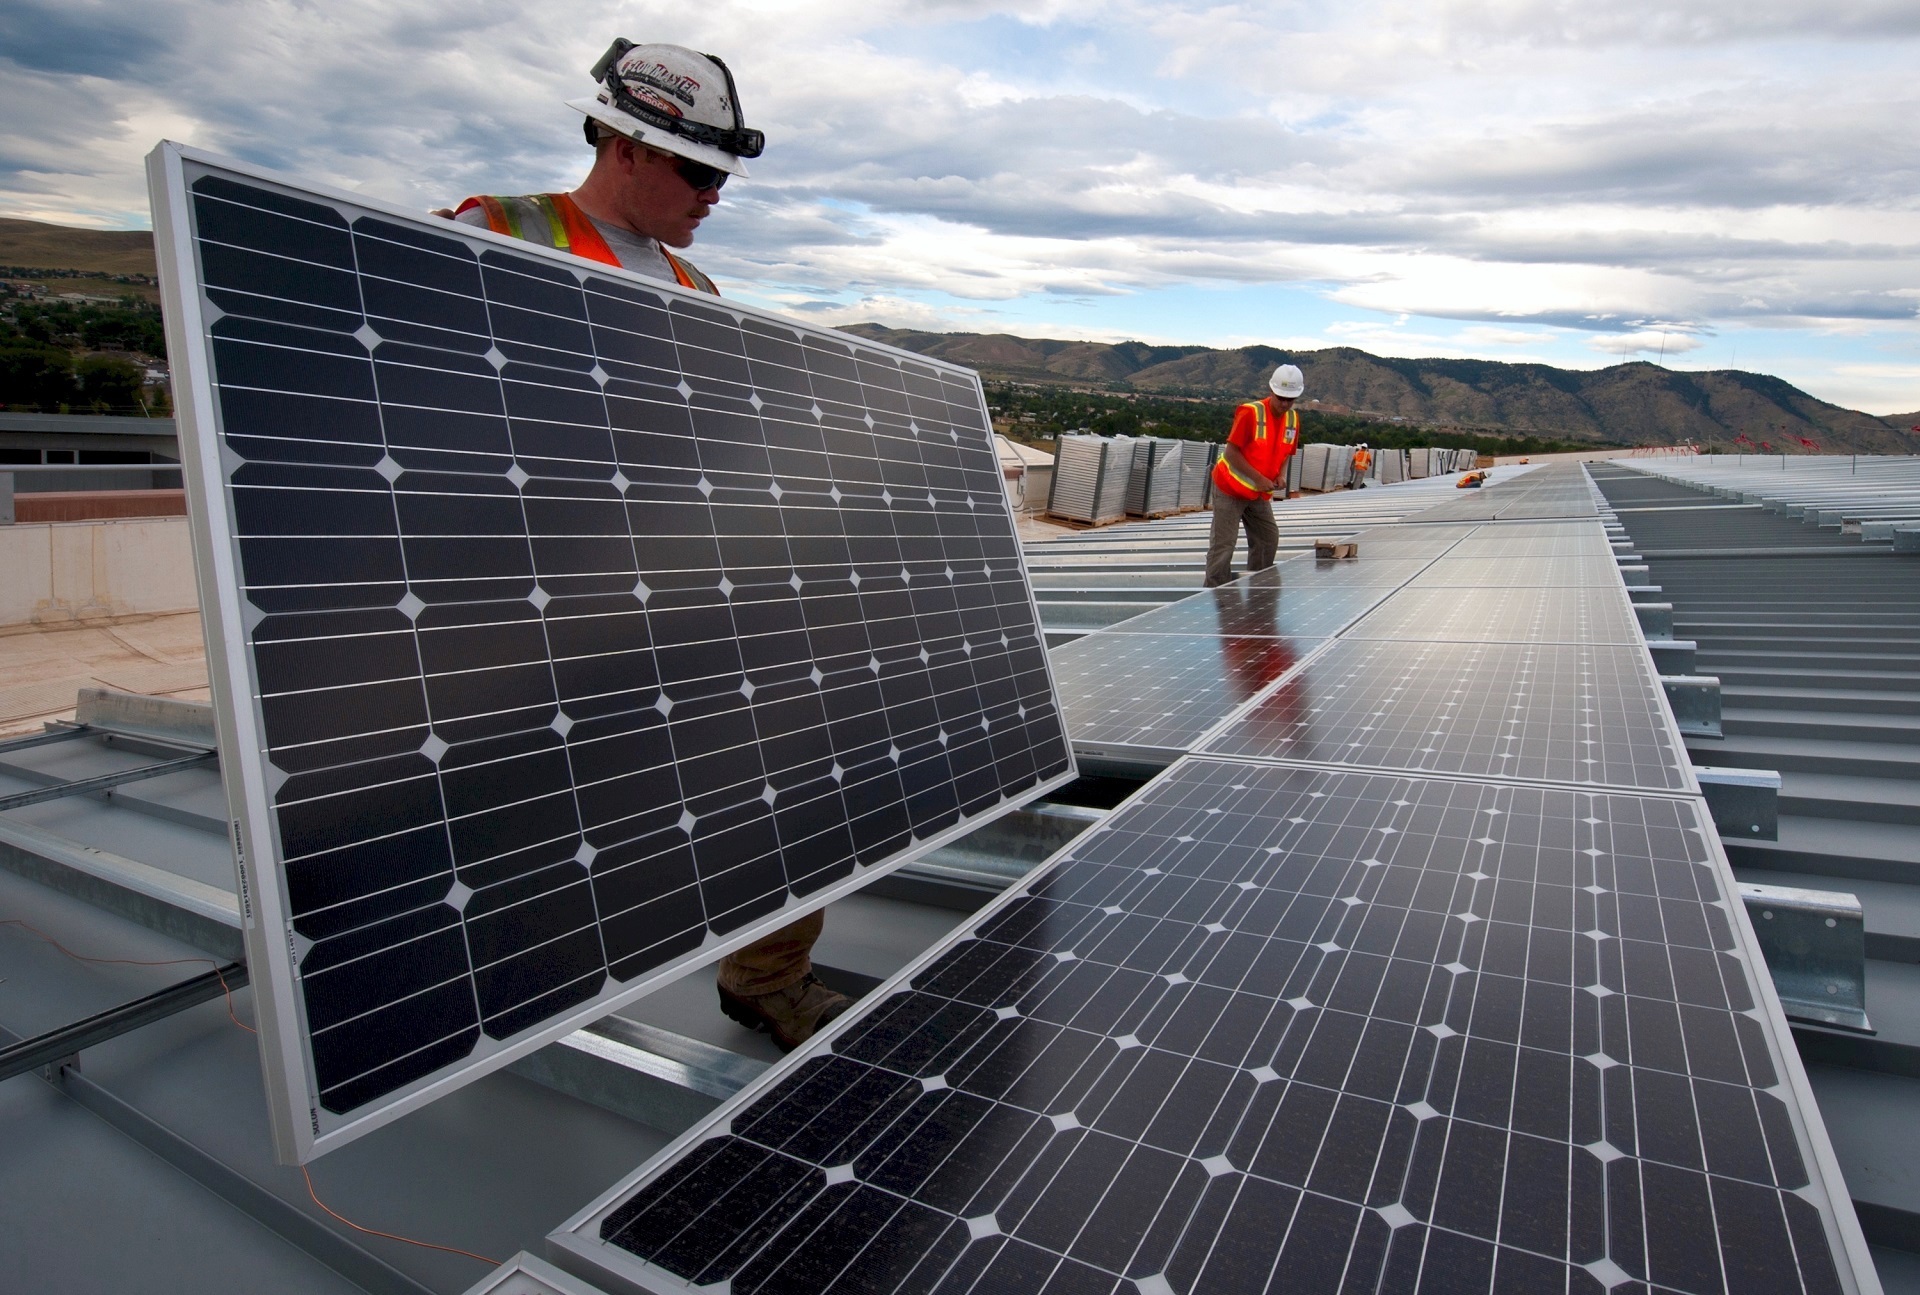 Solar jobs plunge in California